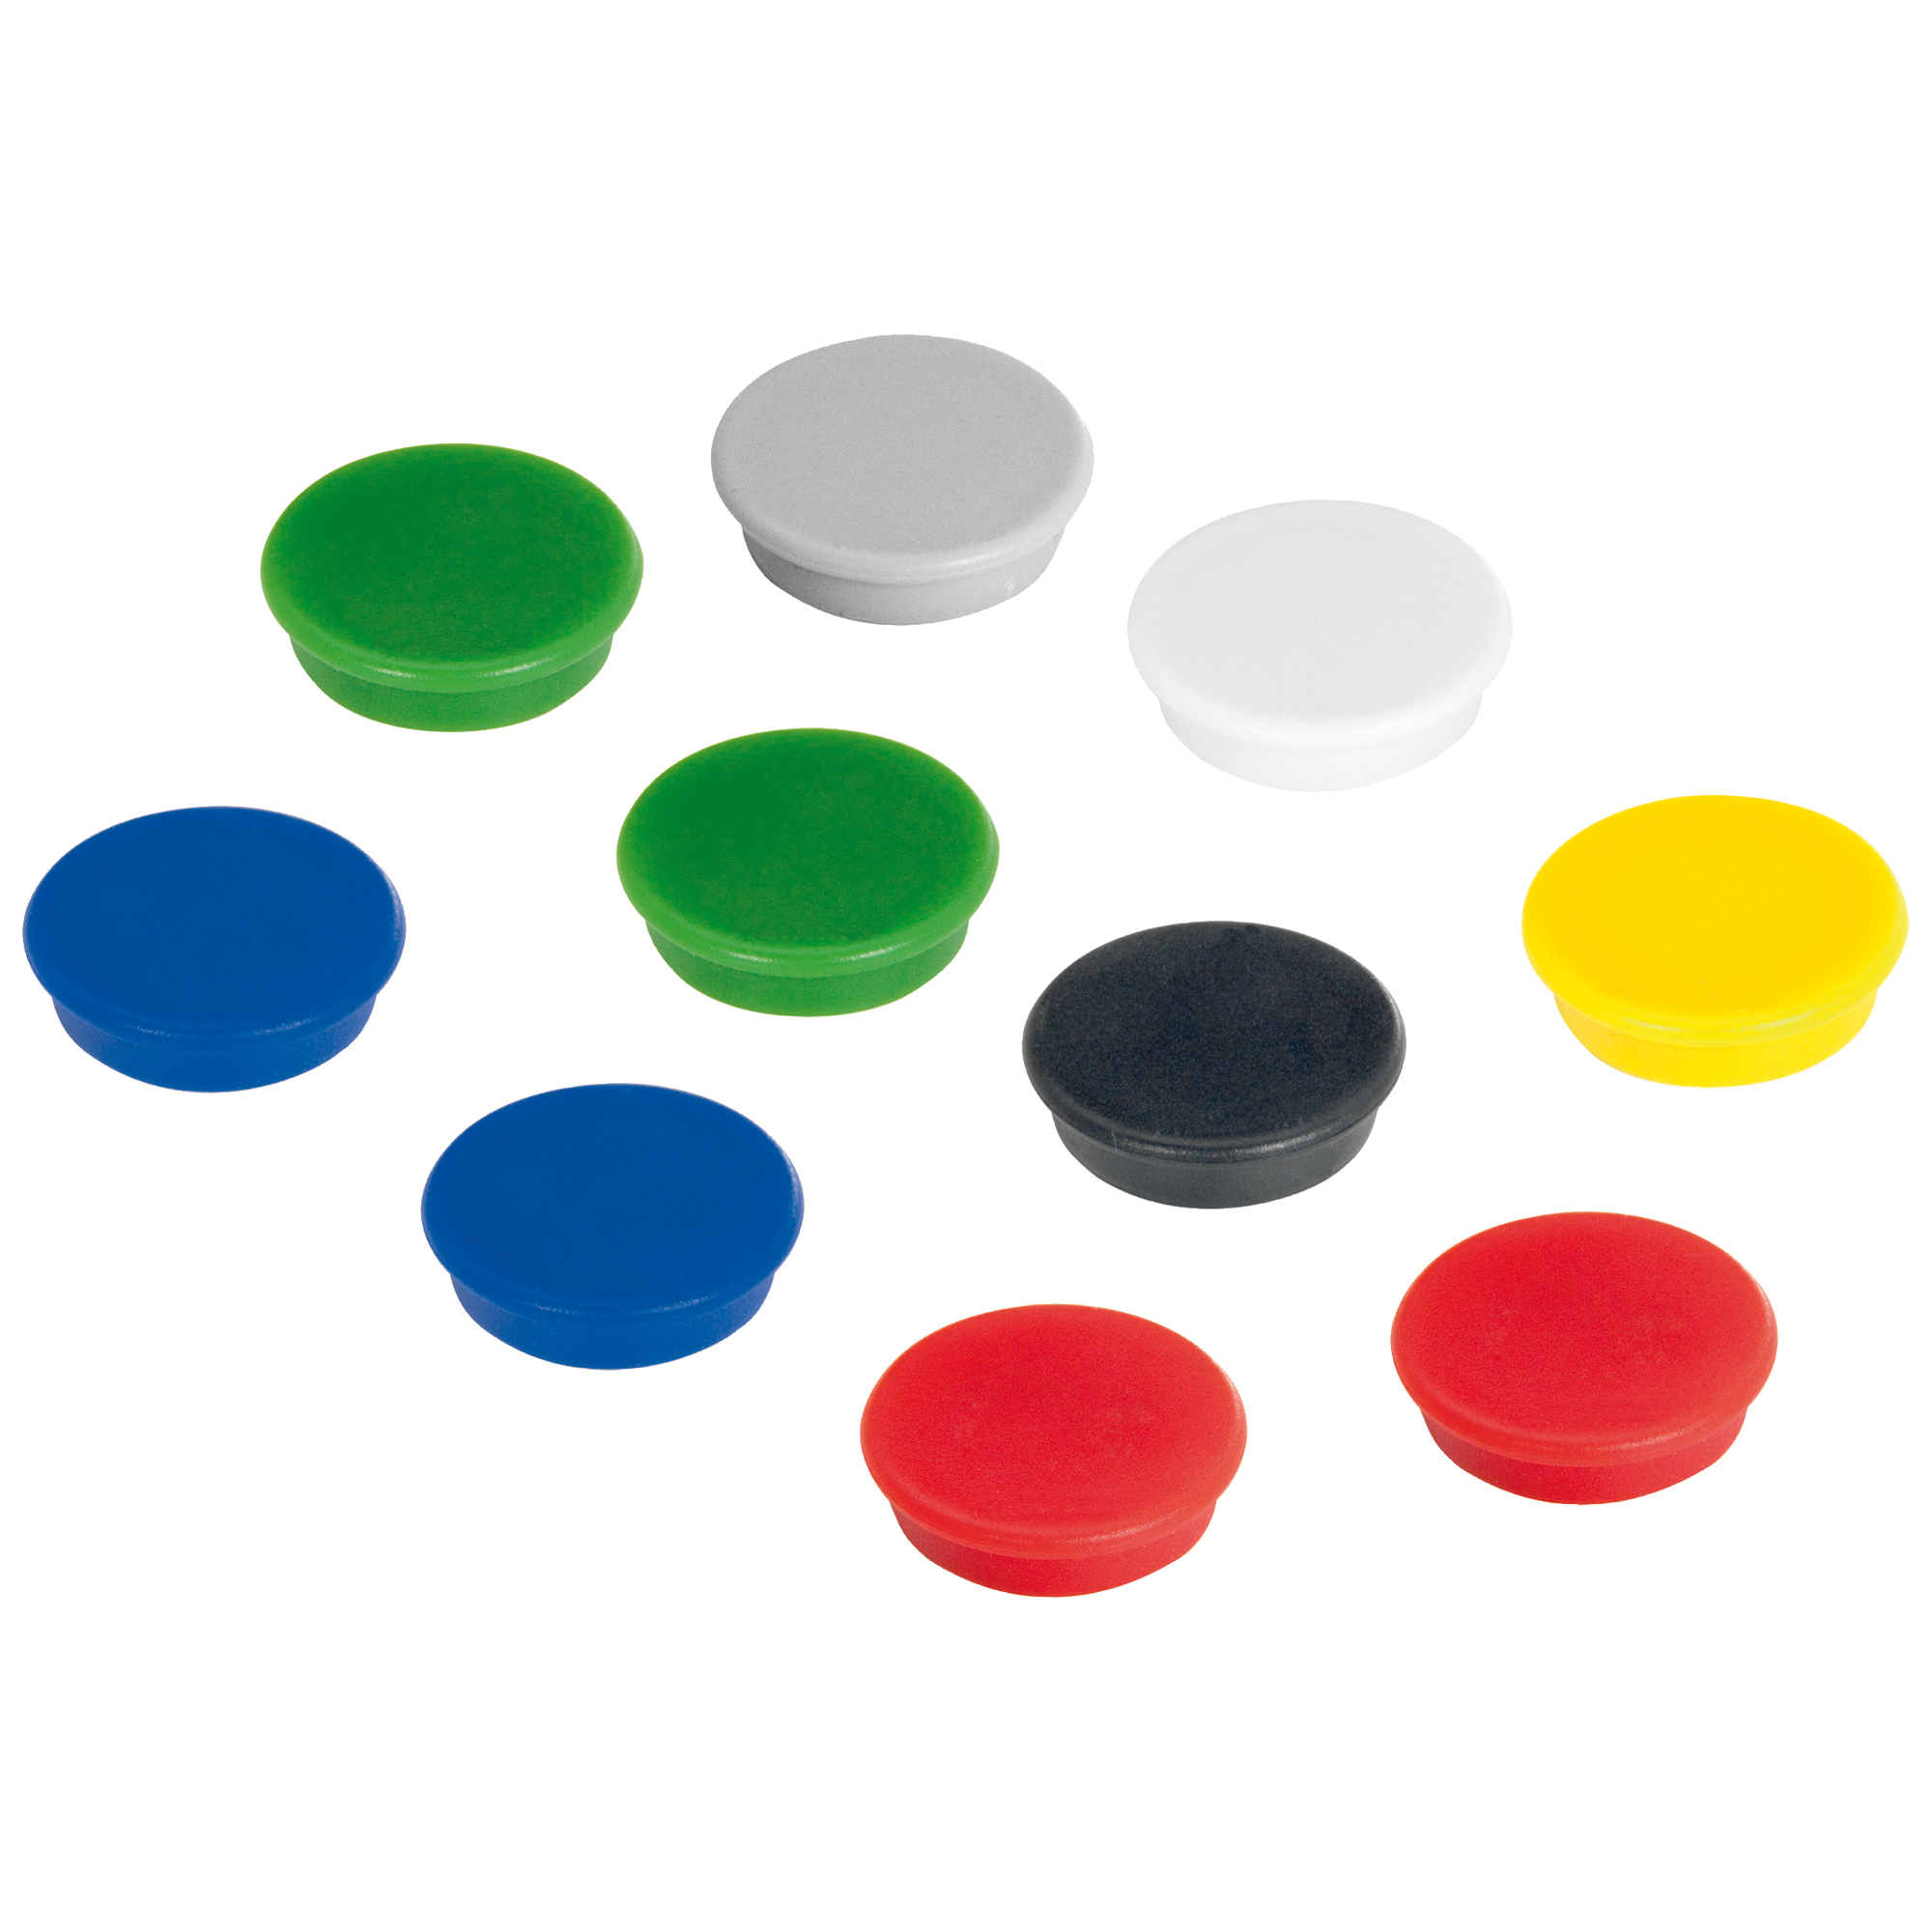 Pro/Office Magnet 24 mm verschiedene Farben, sortiert